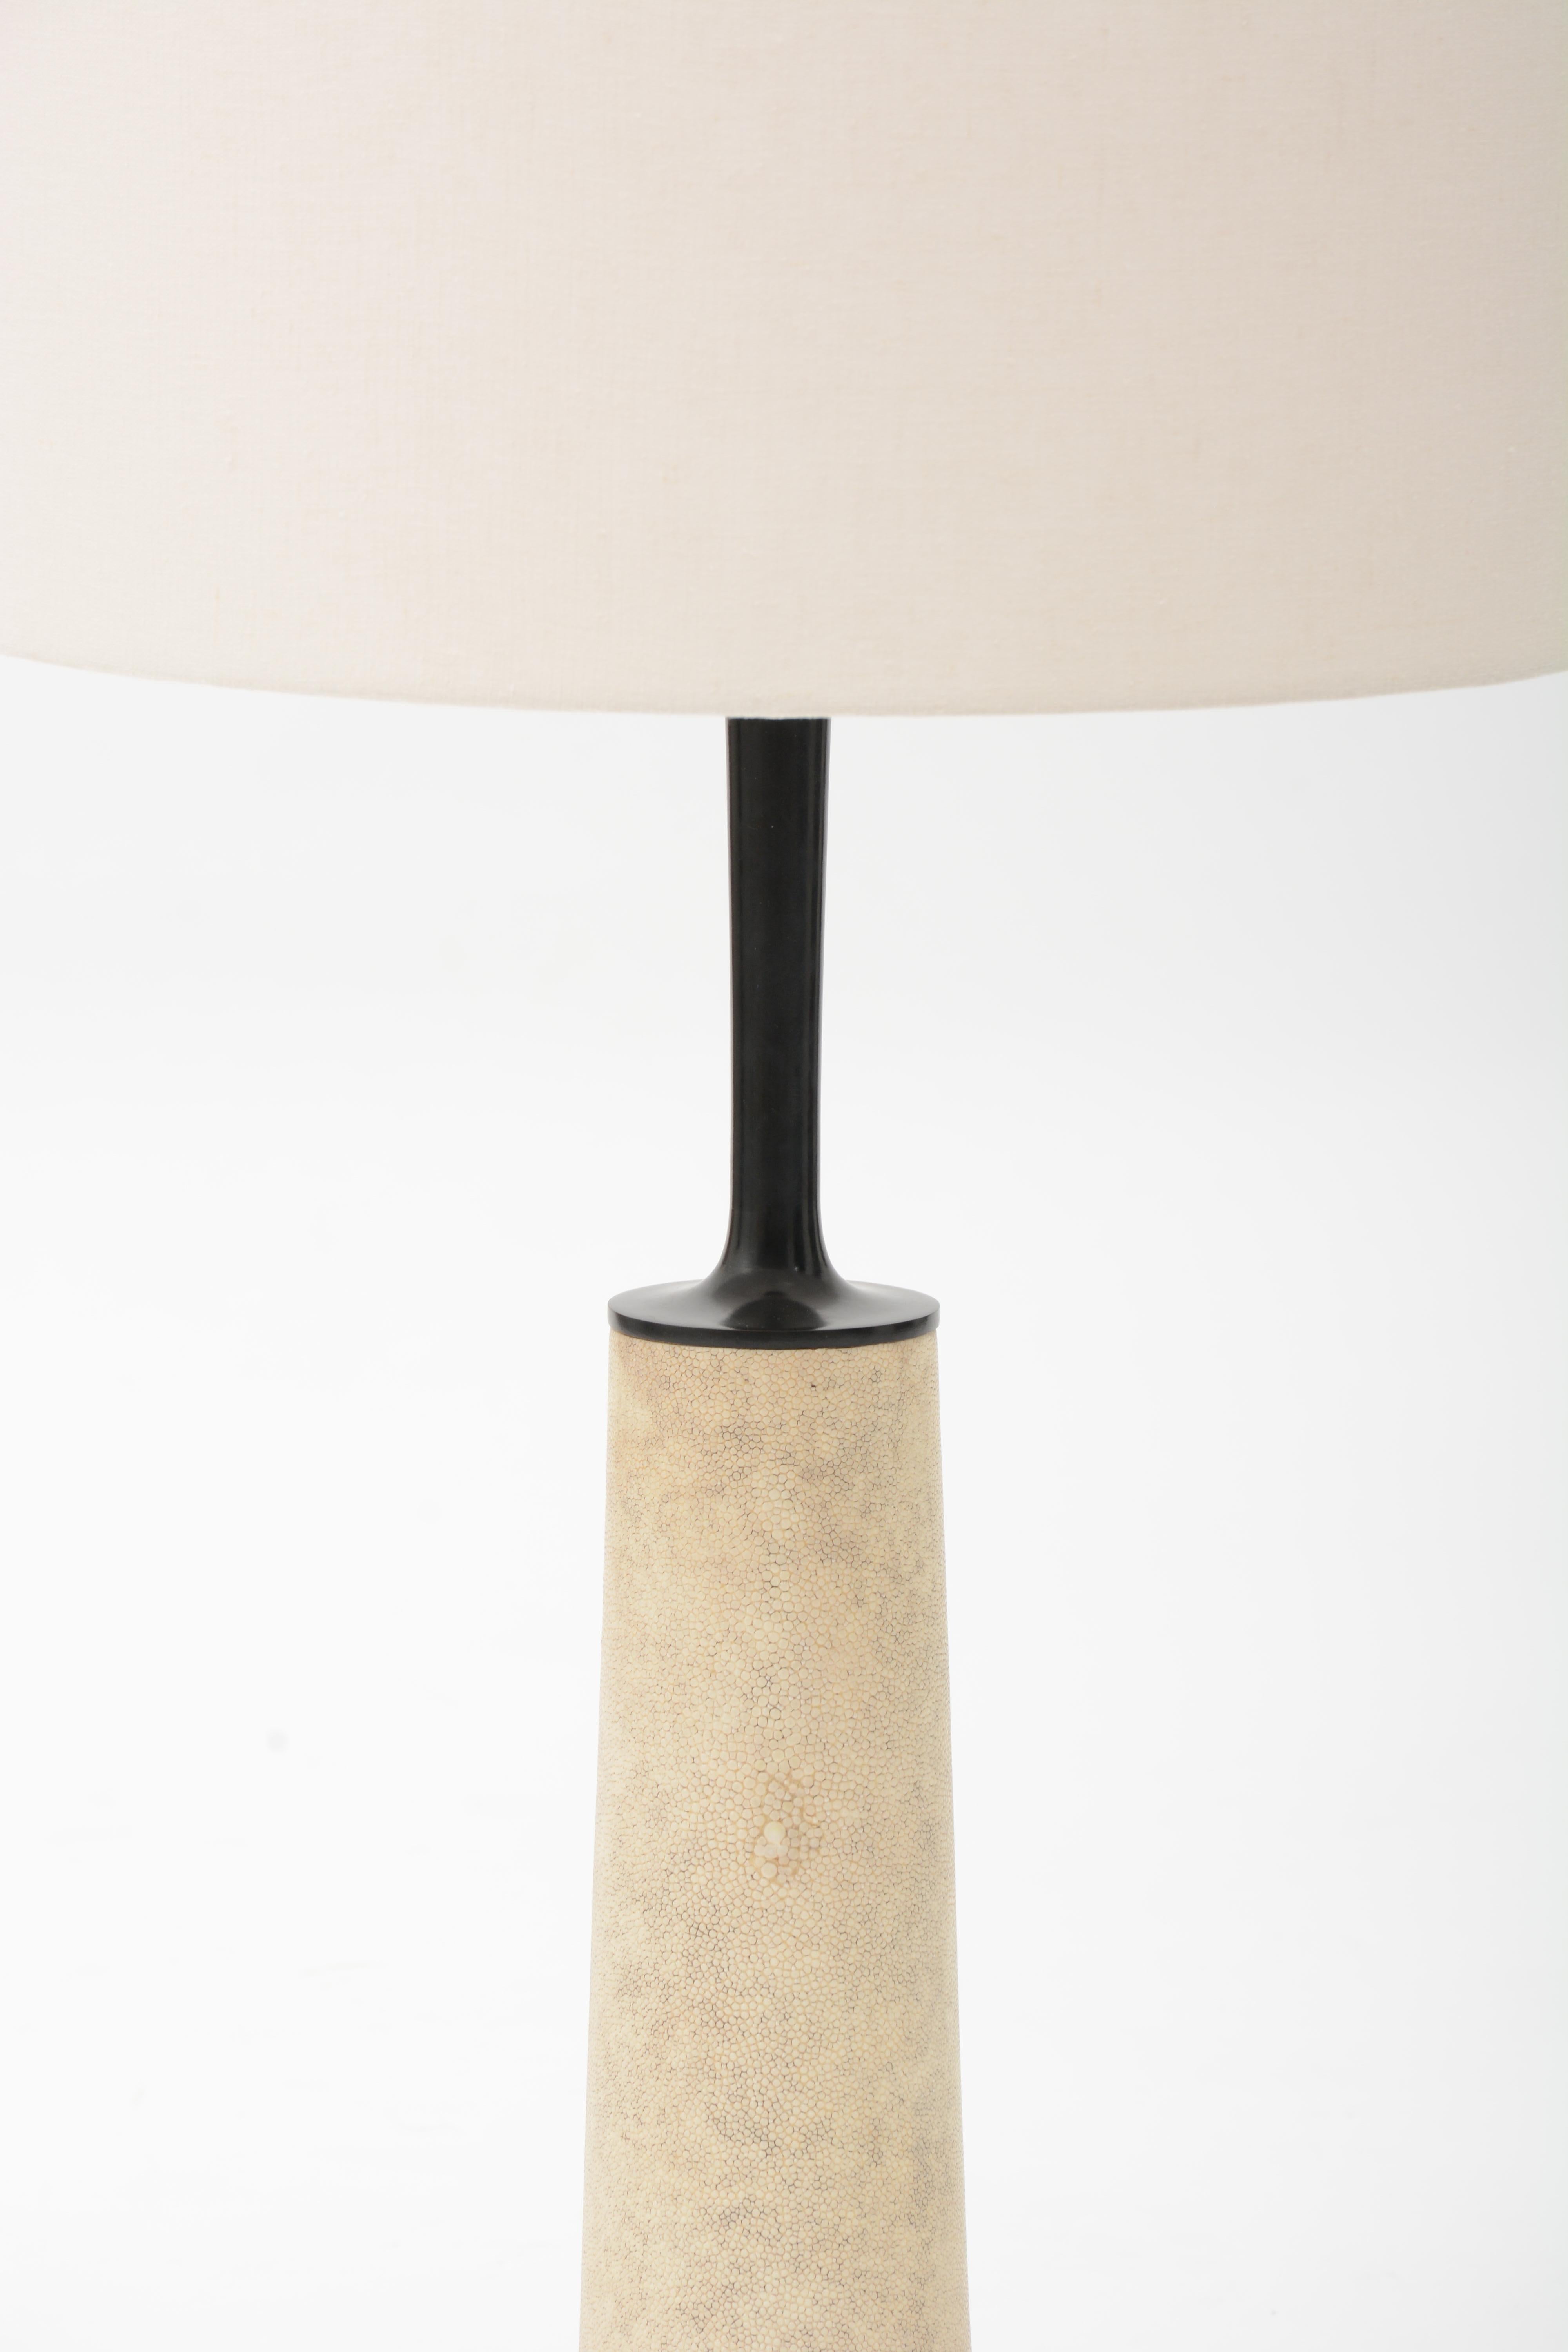 Jaya Floor Lamp in Bronze and Ivory Shagreen by Elan Atelier 1